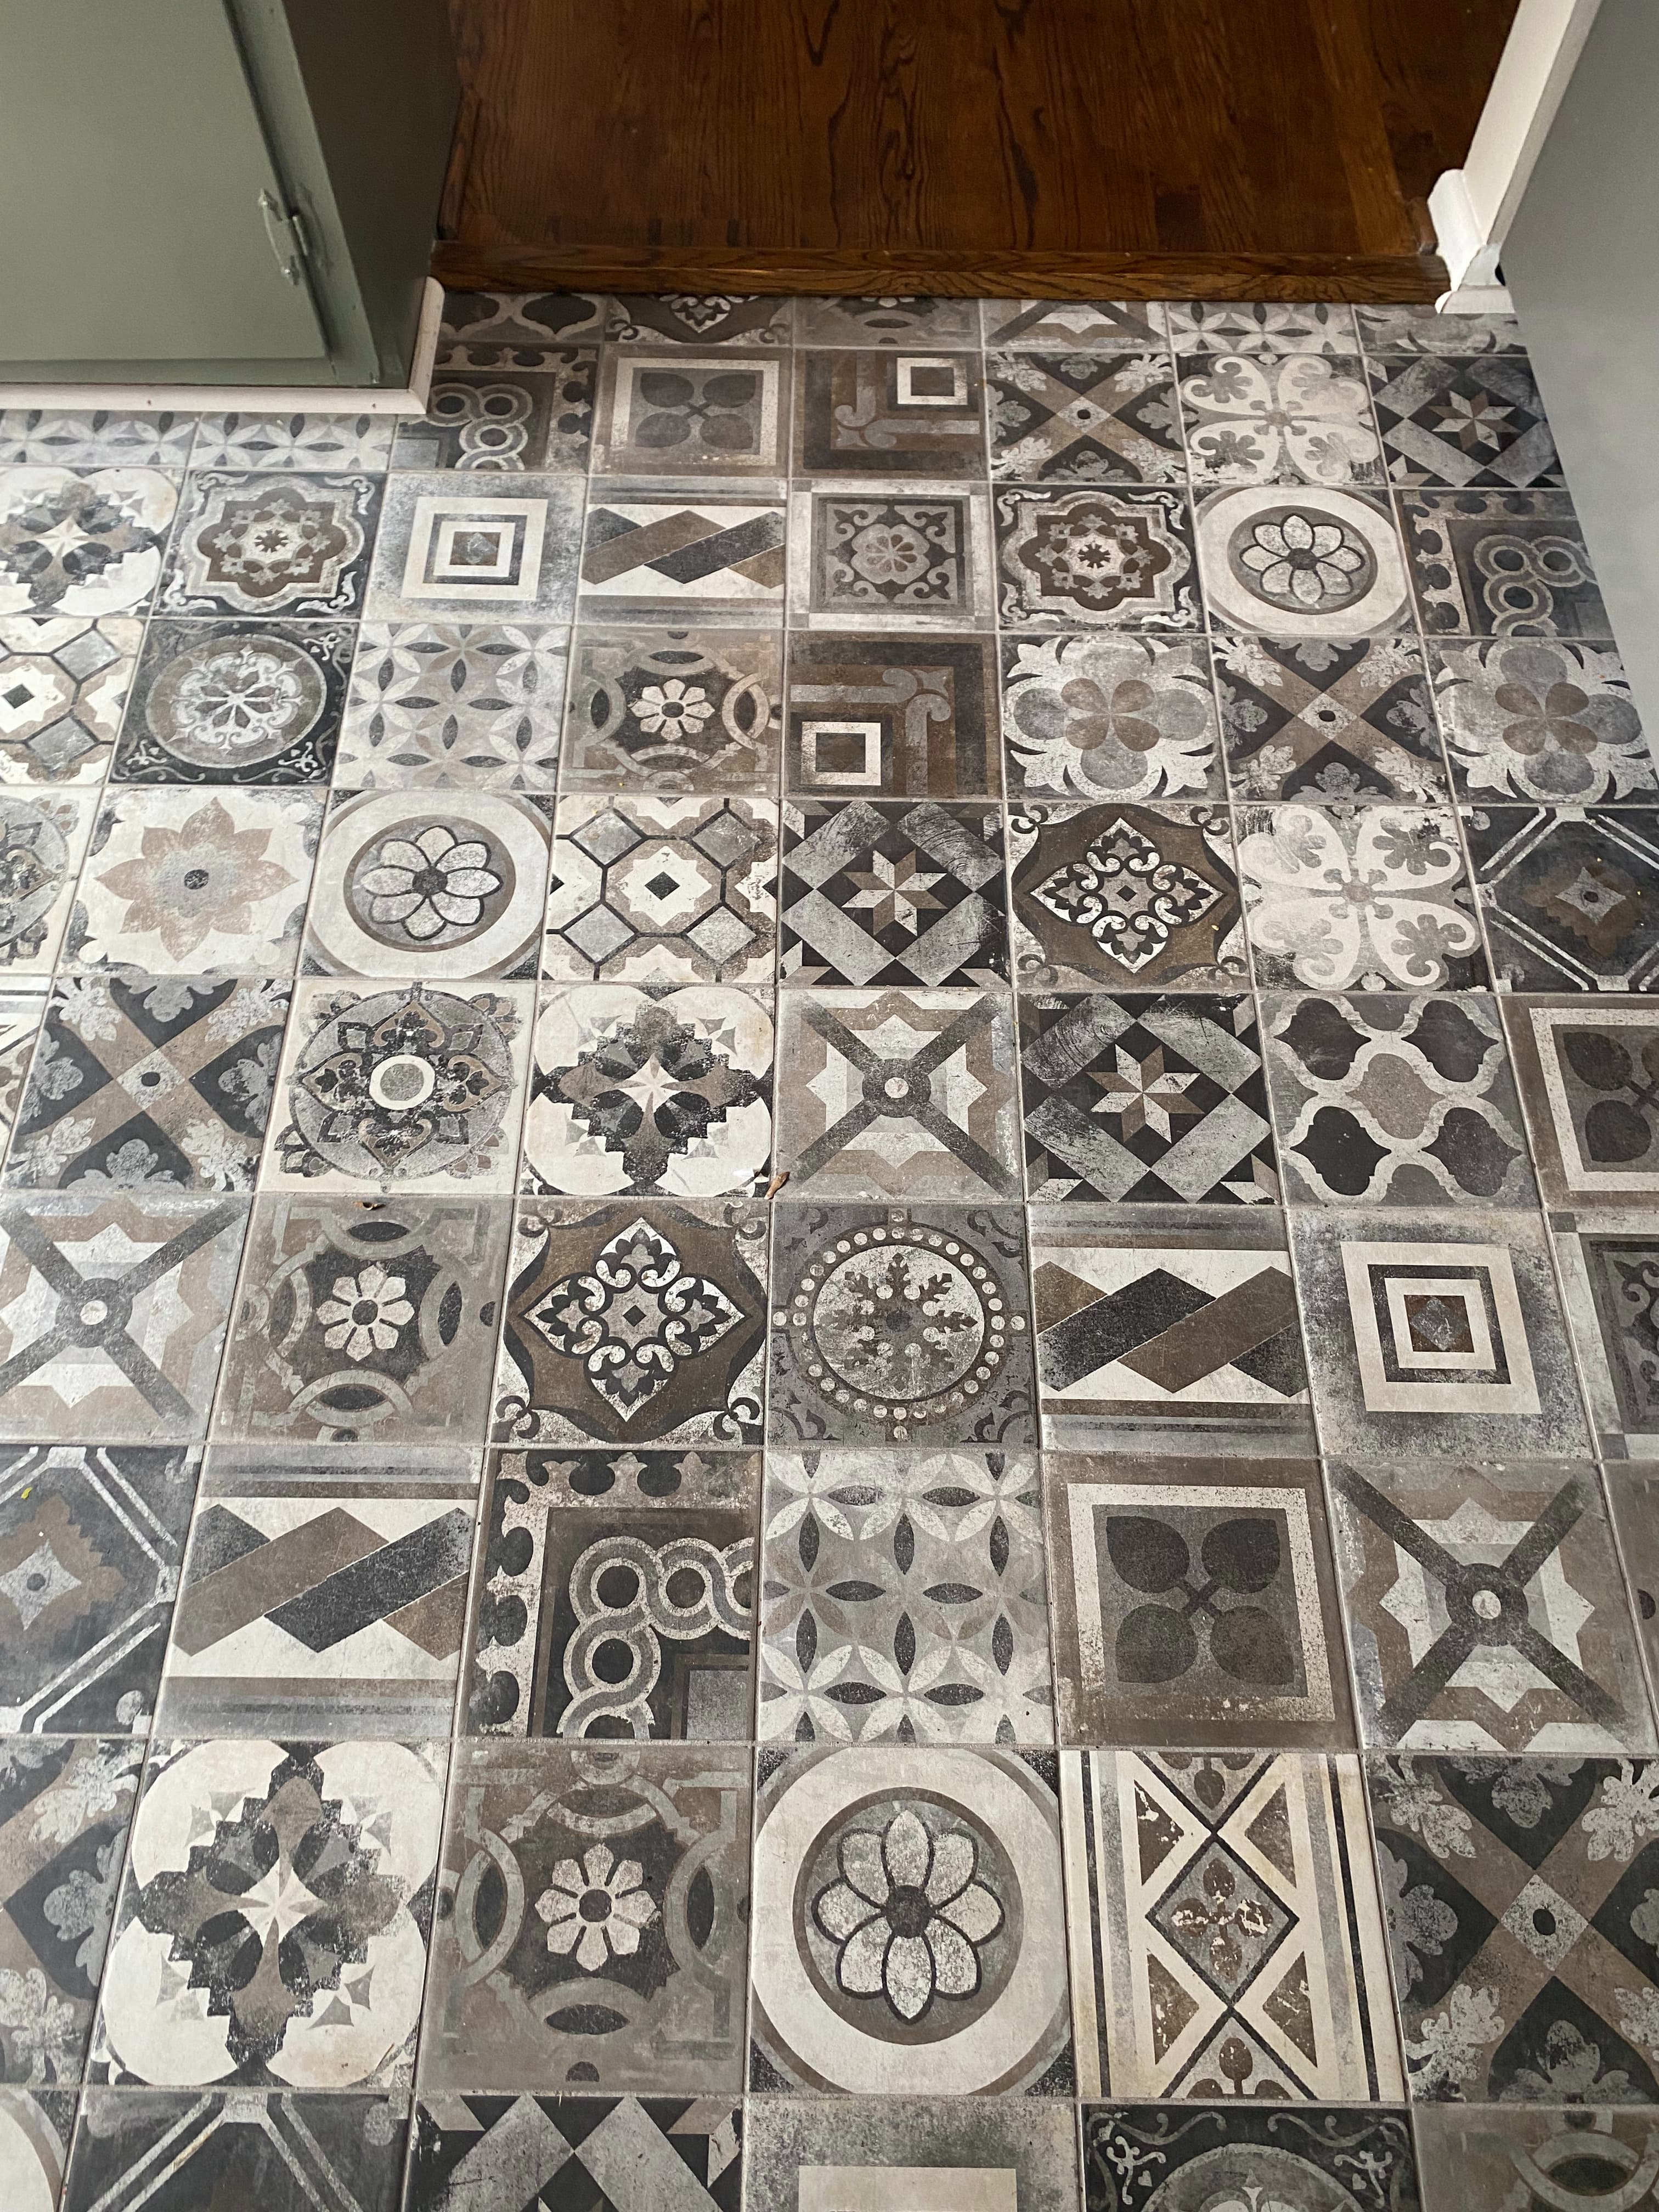 Tile flooring | Carpetland USA of Virginia